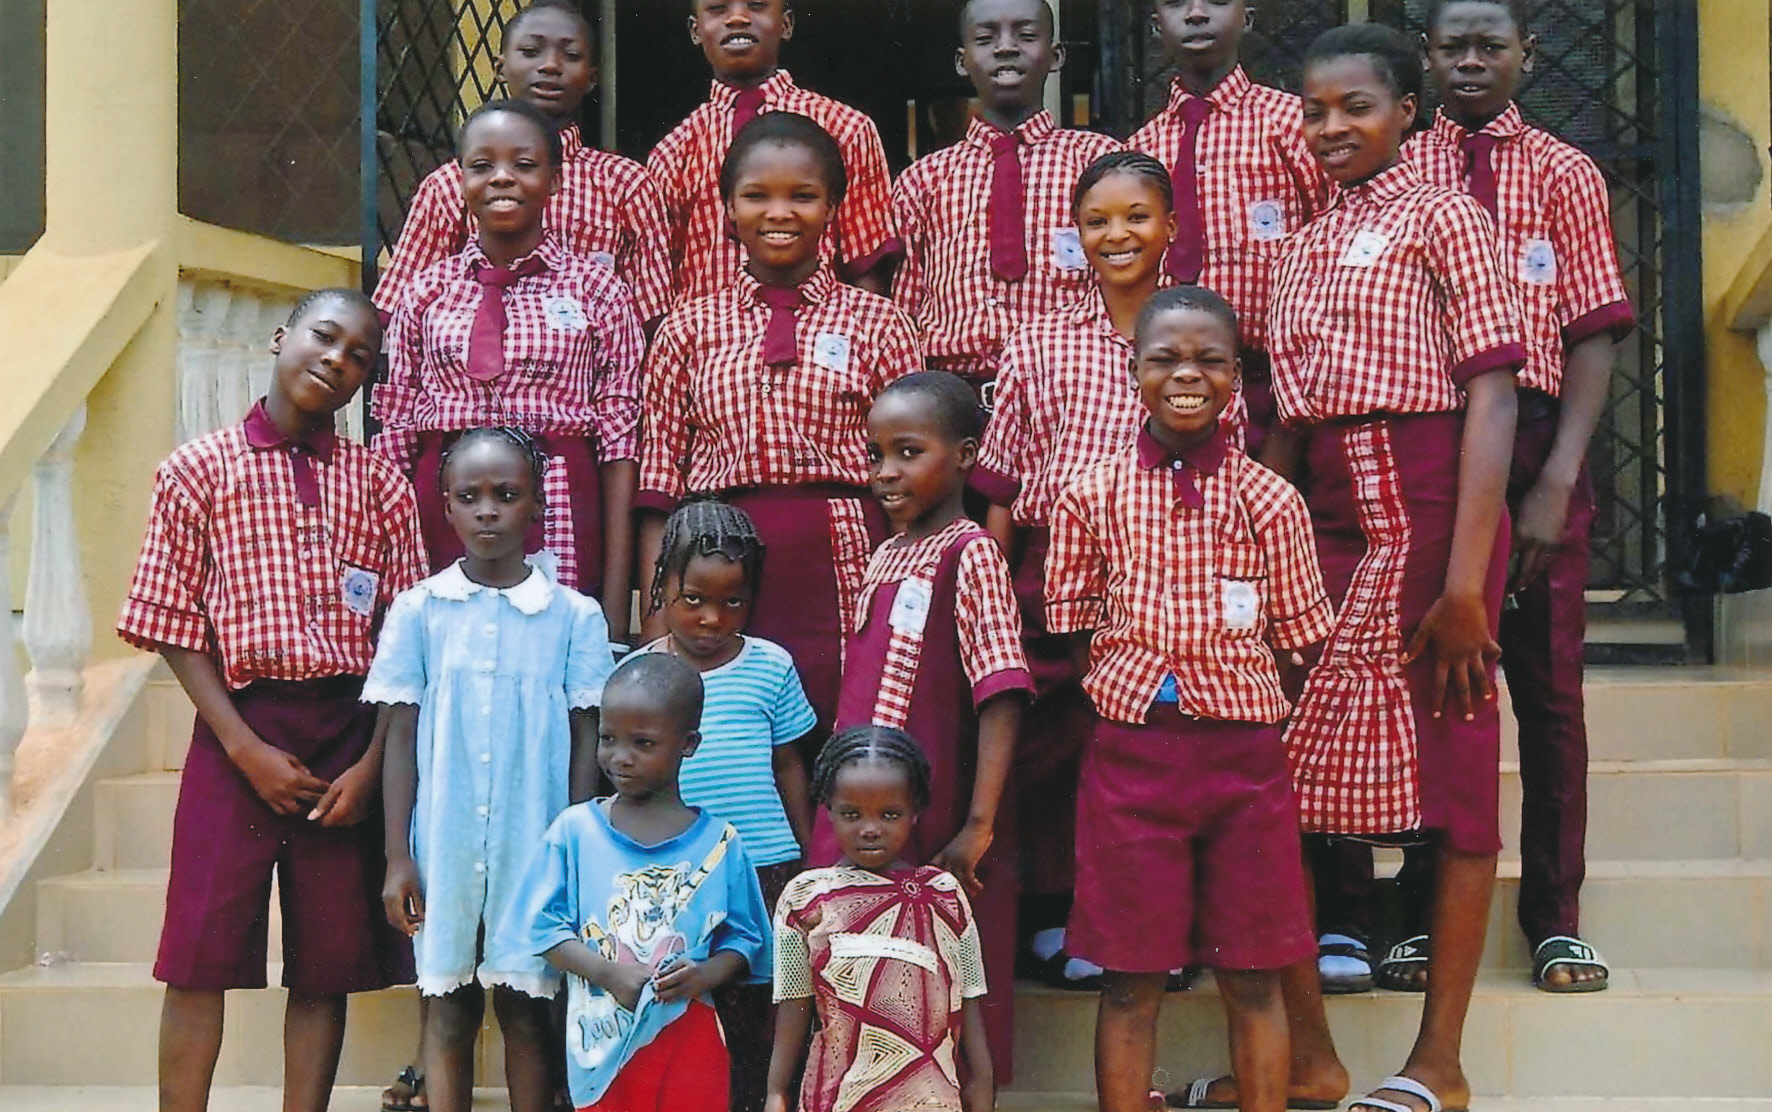  Kadijat and her classmates in uniform at the Christian school 